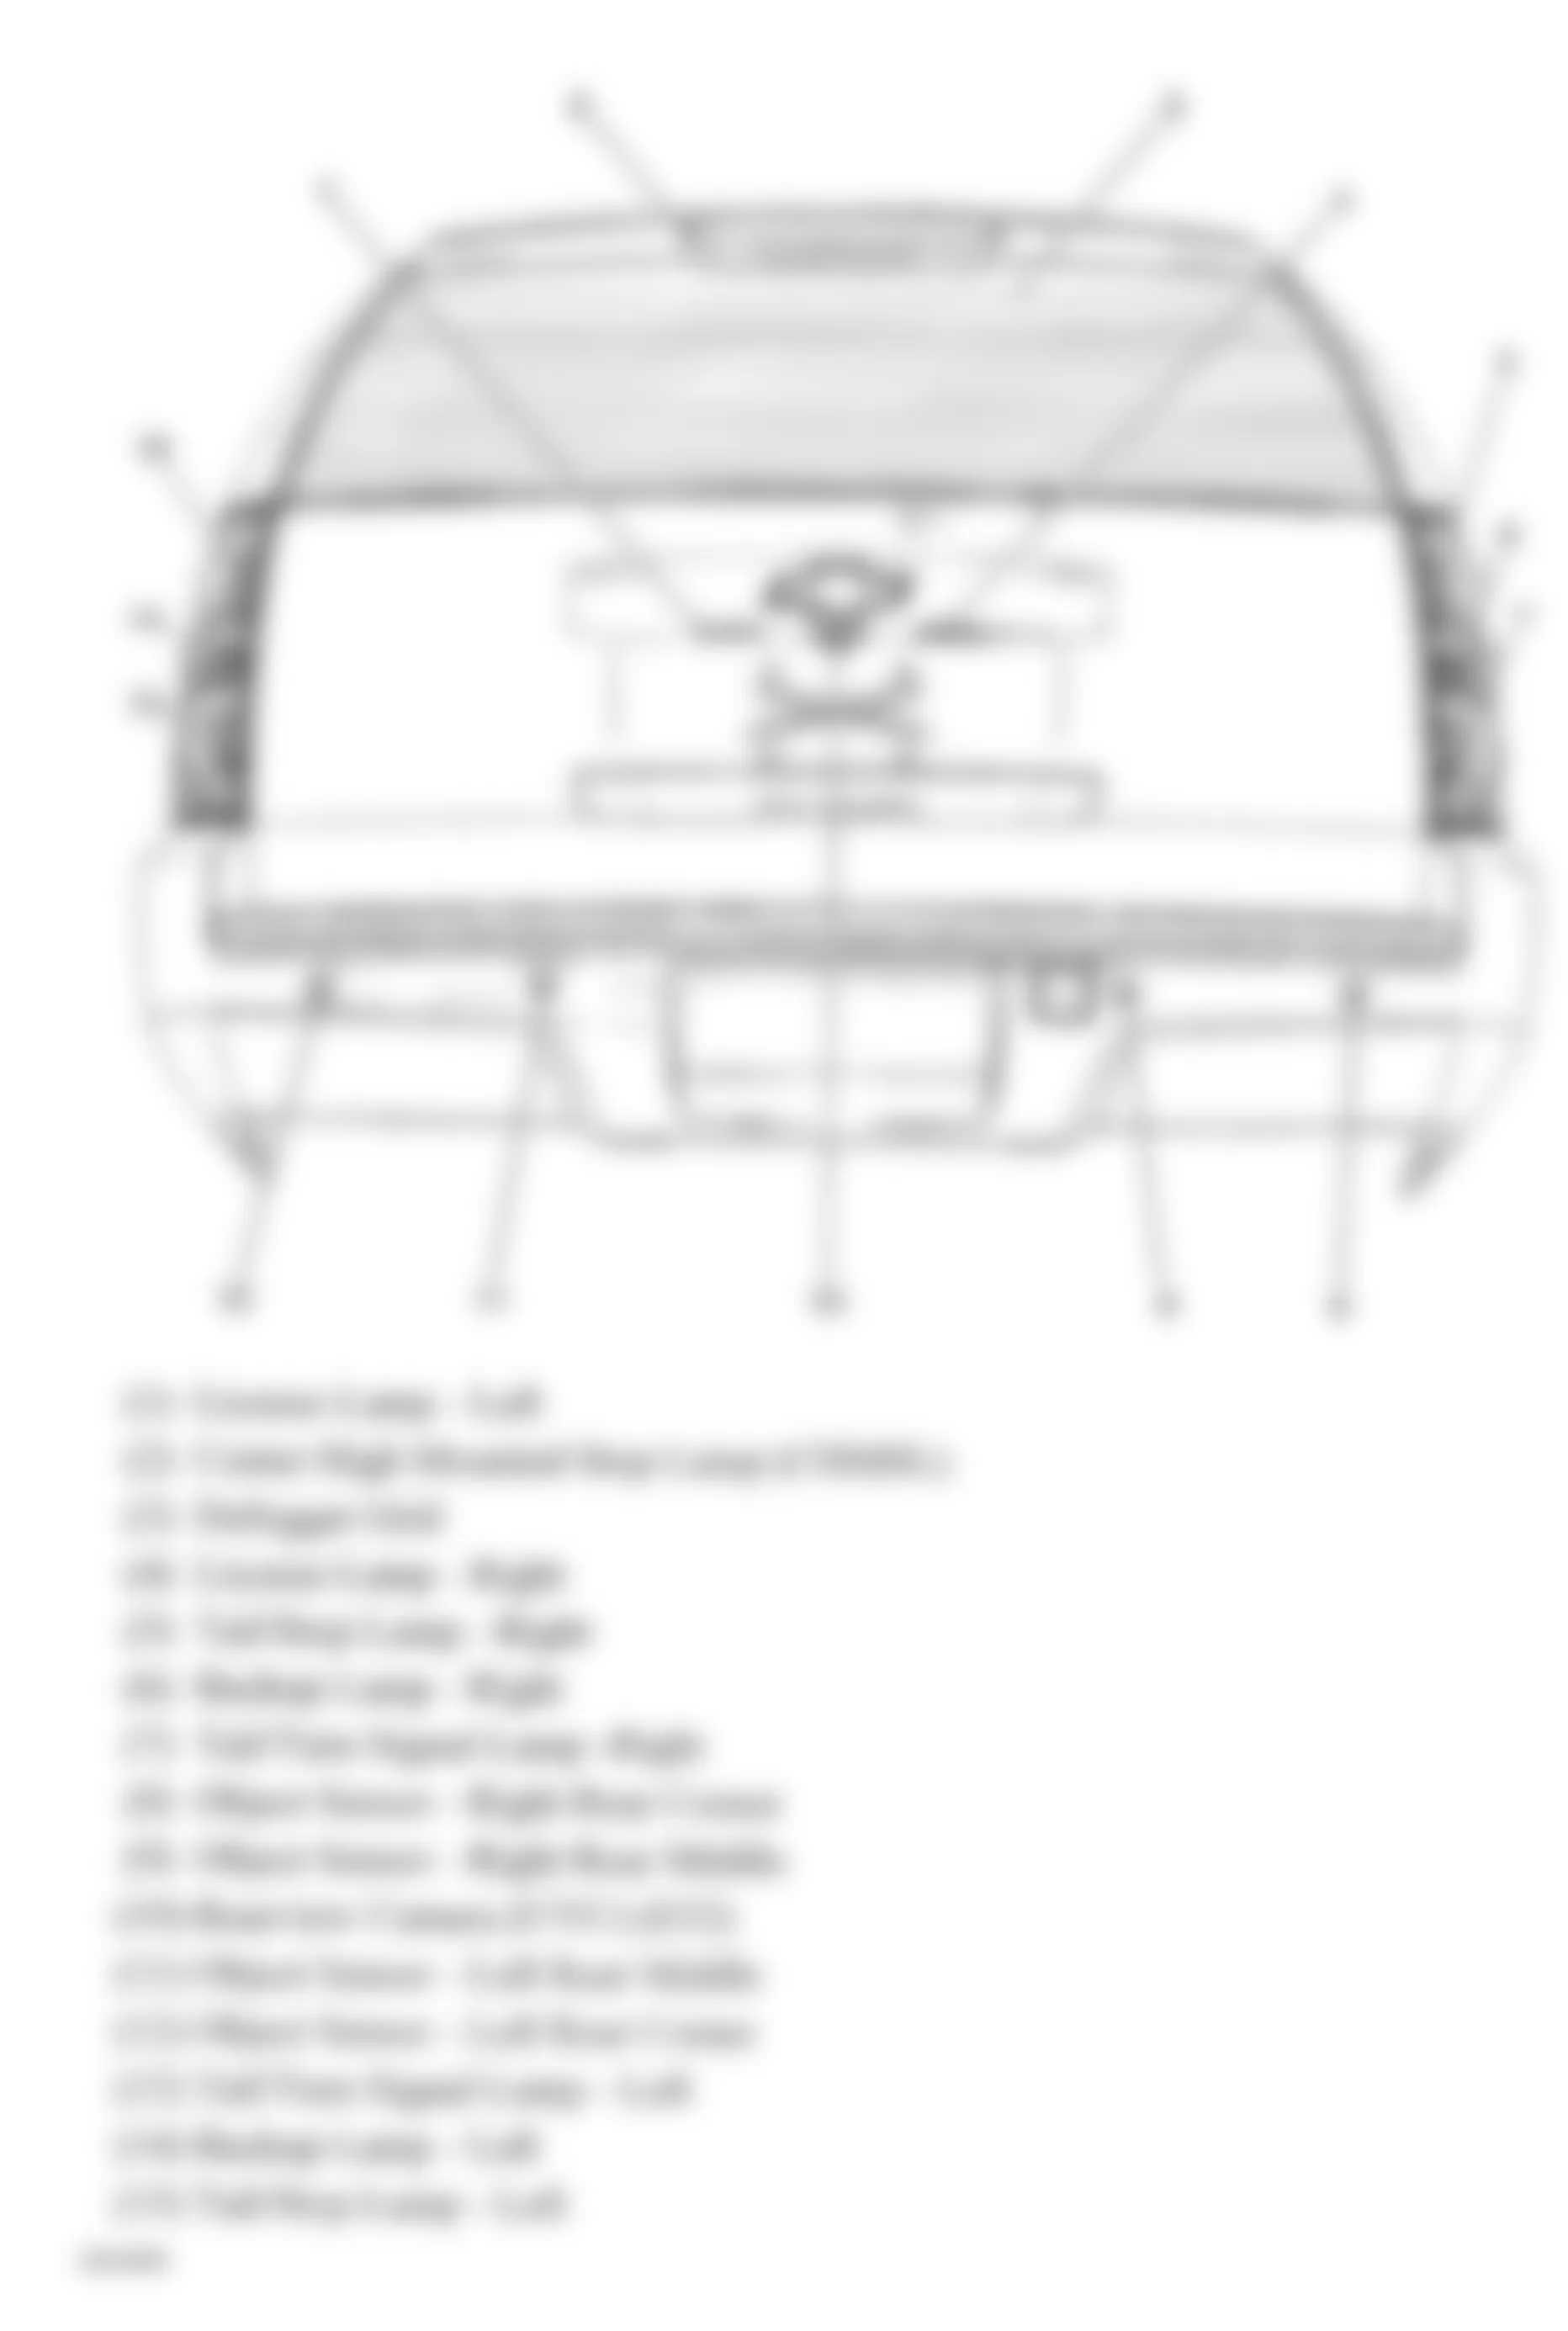 GMC Yukon Denali 2008 - Component Locations -  Rear Of Vehicle (Avalanche, Suburban & Tahoe W/One Piece Liftgate)